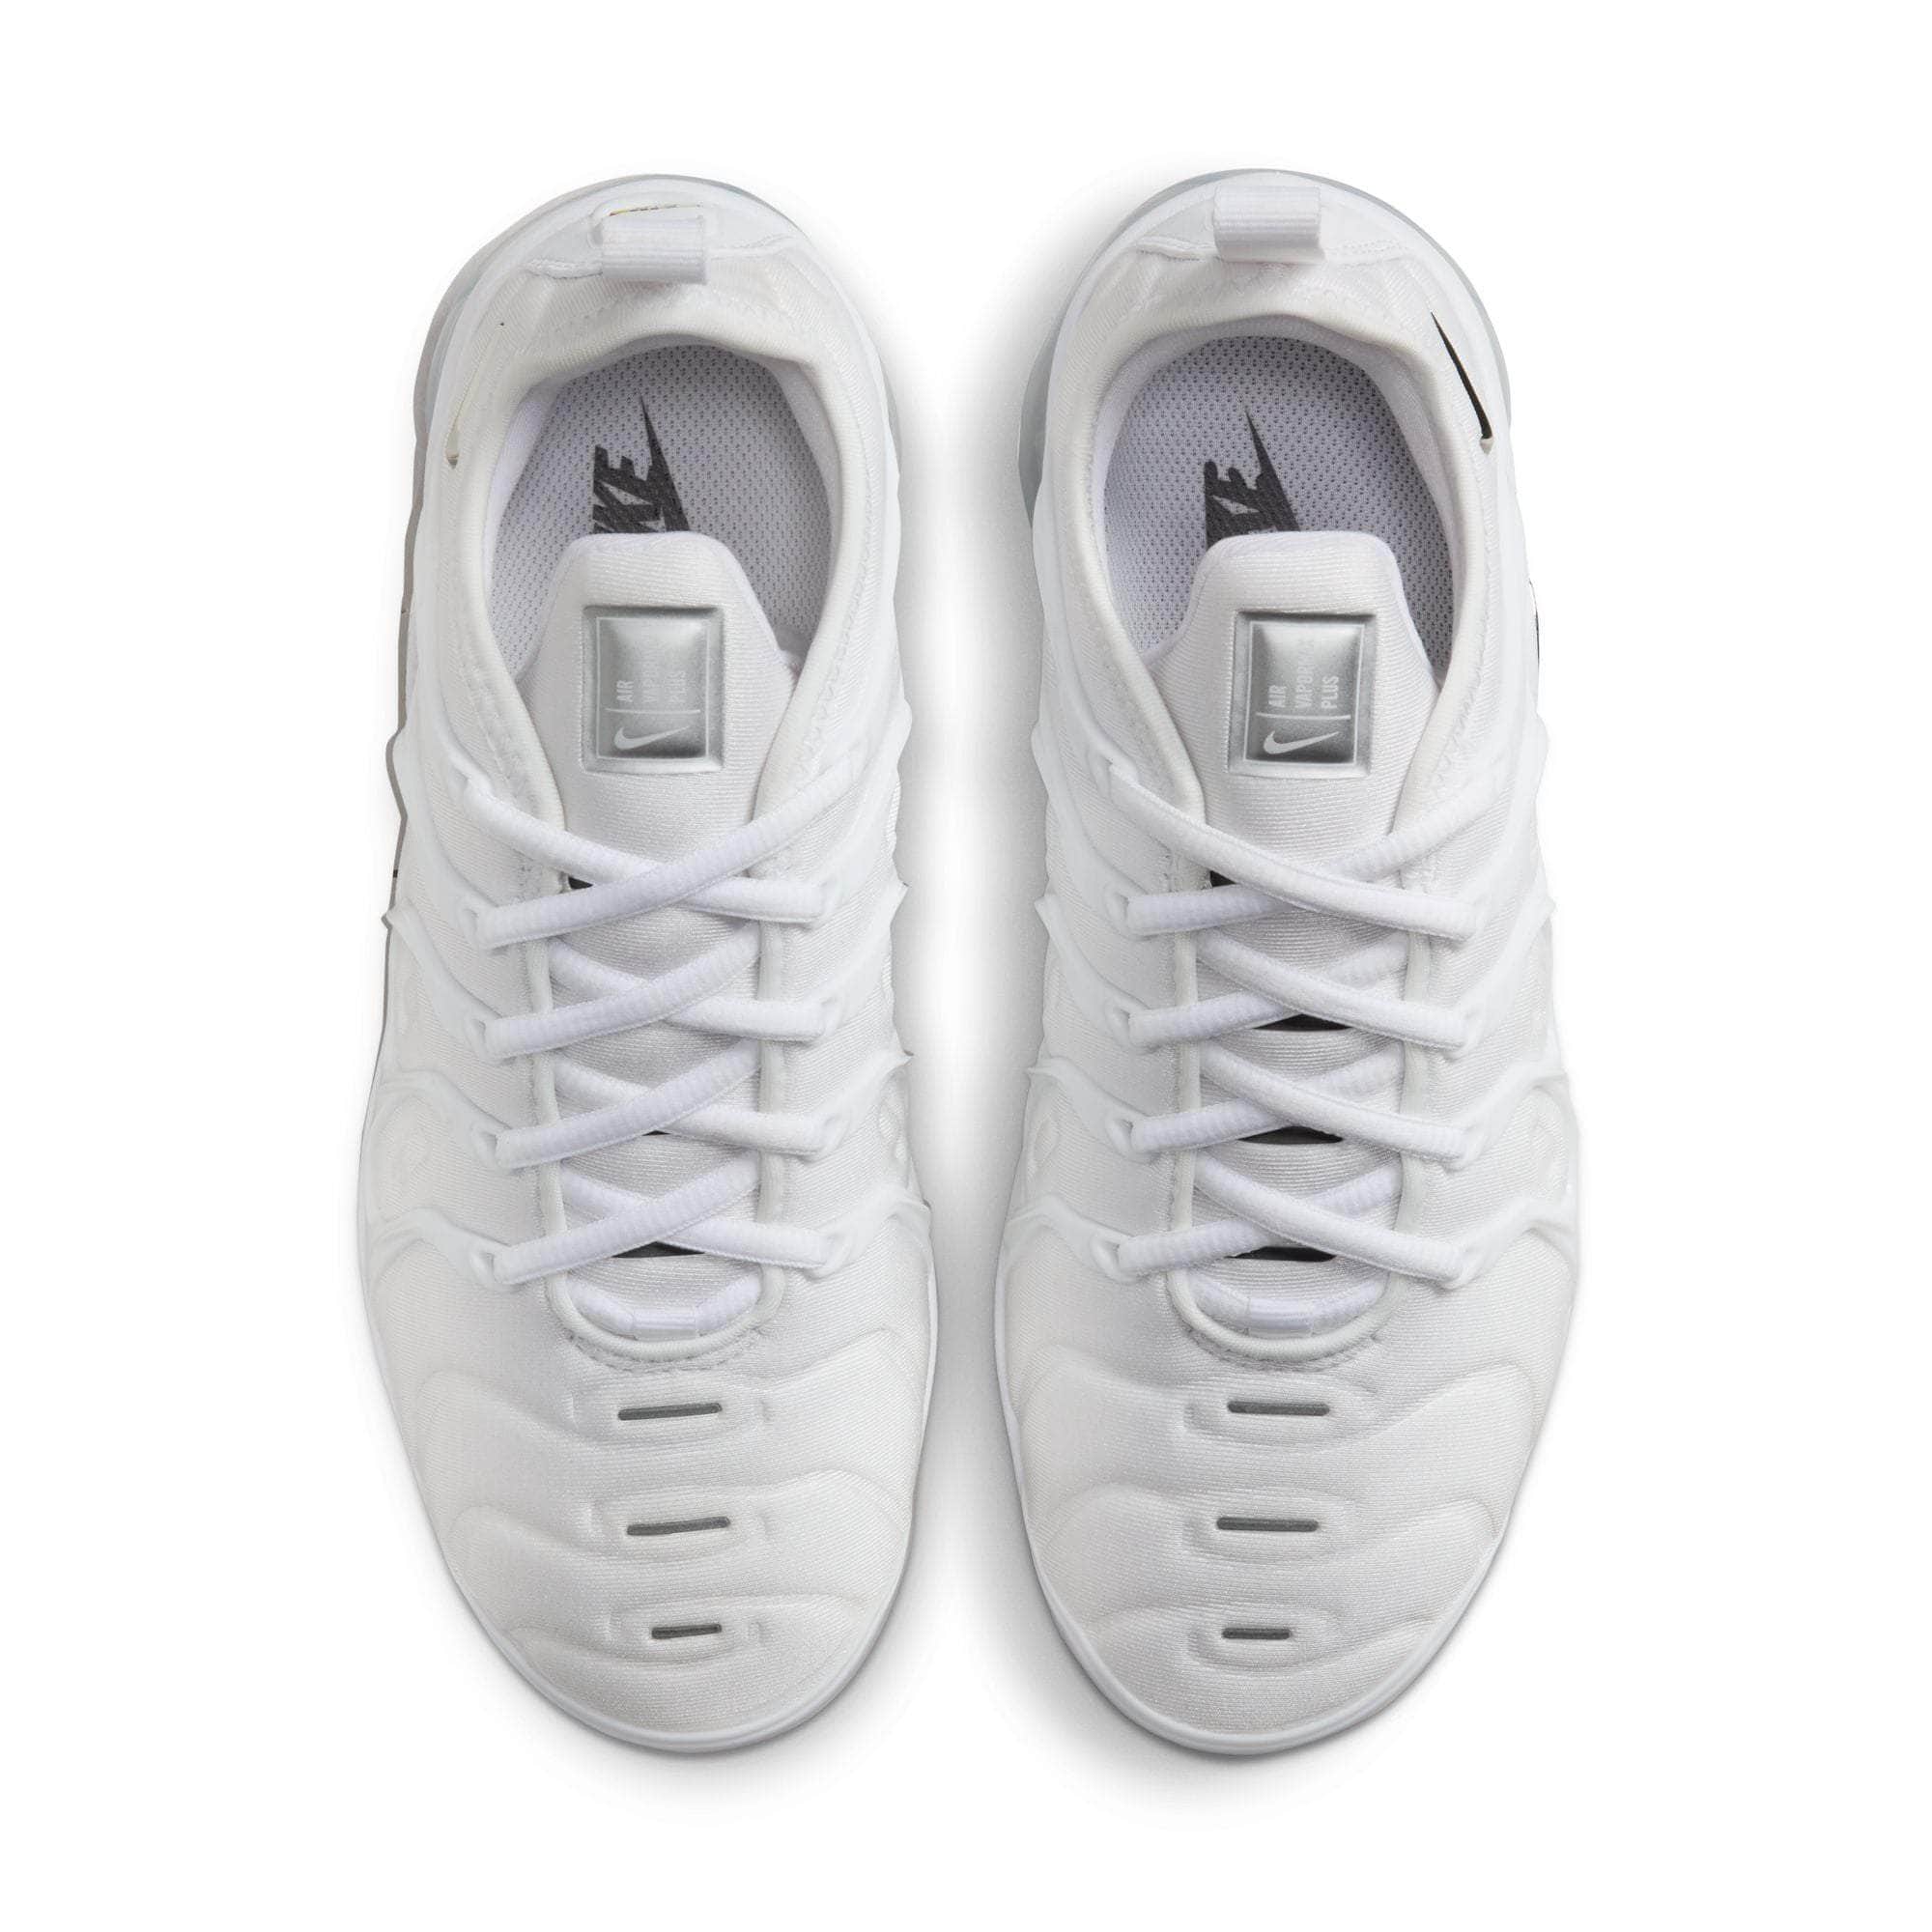 Nike FOOTWEAR Nike Air VaporMax Plus "White Metallic Silver" - Women's